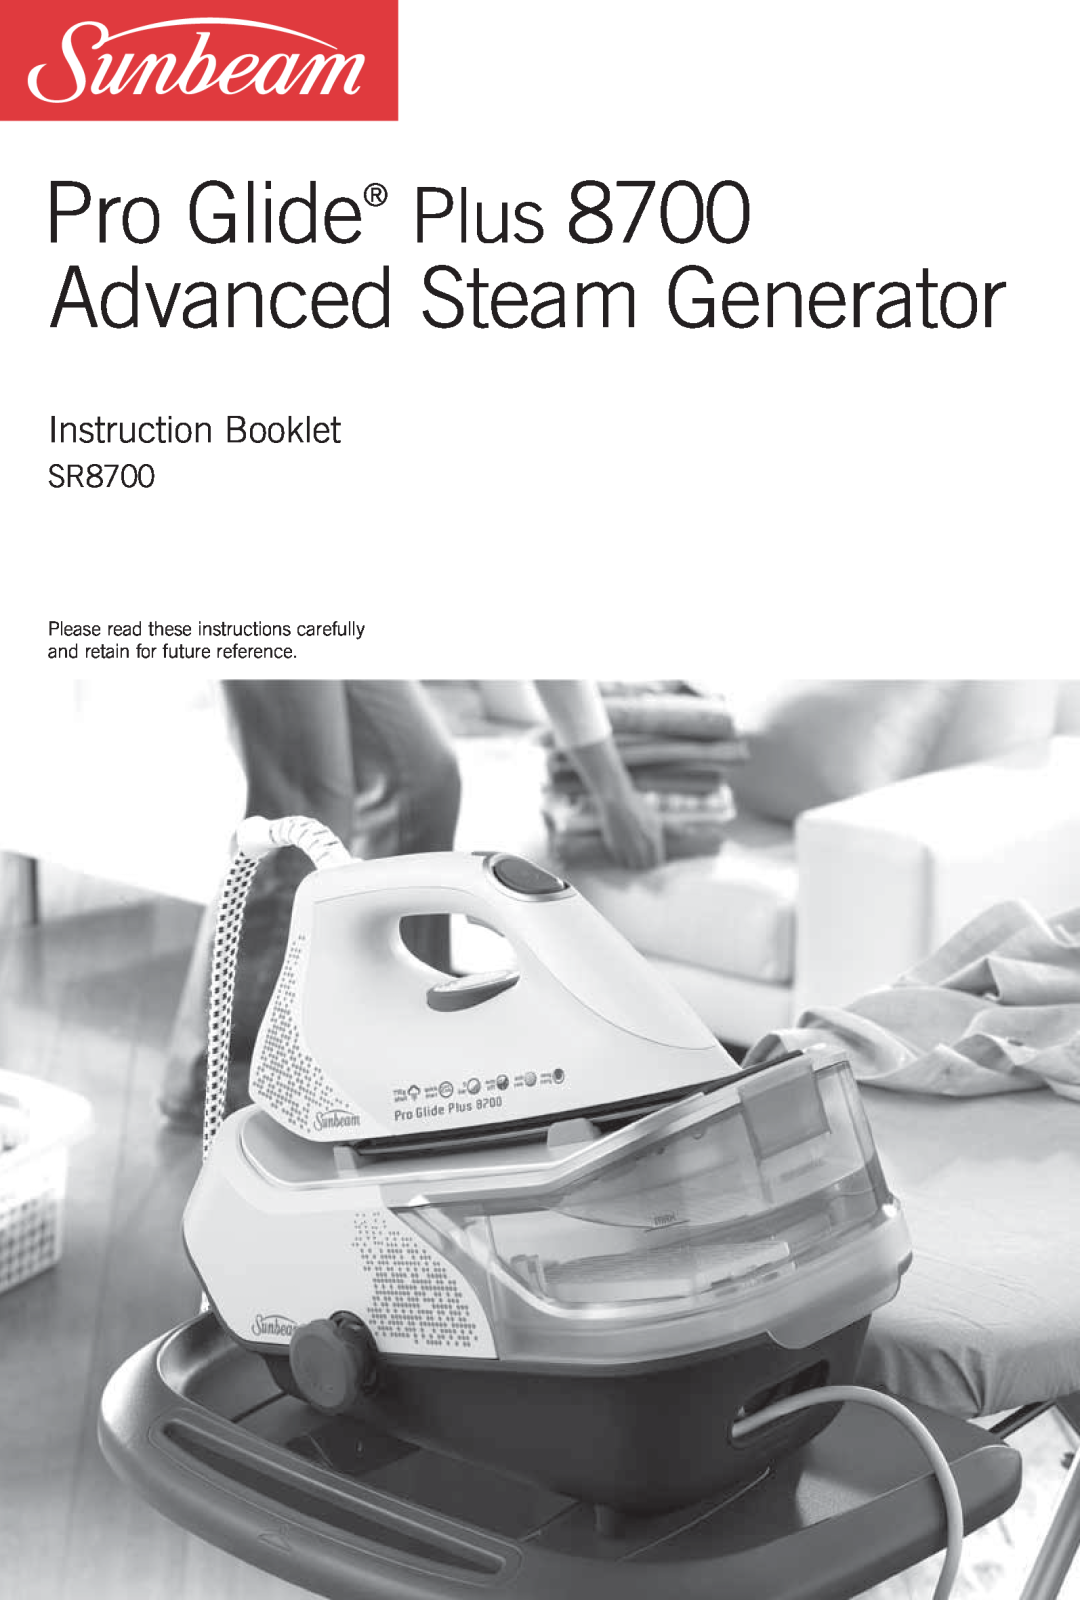 Sunbeam SR8700 manual Pro Glide Plus 8700 Advanced Steam Generator, Instruction Booklet 